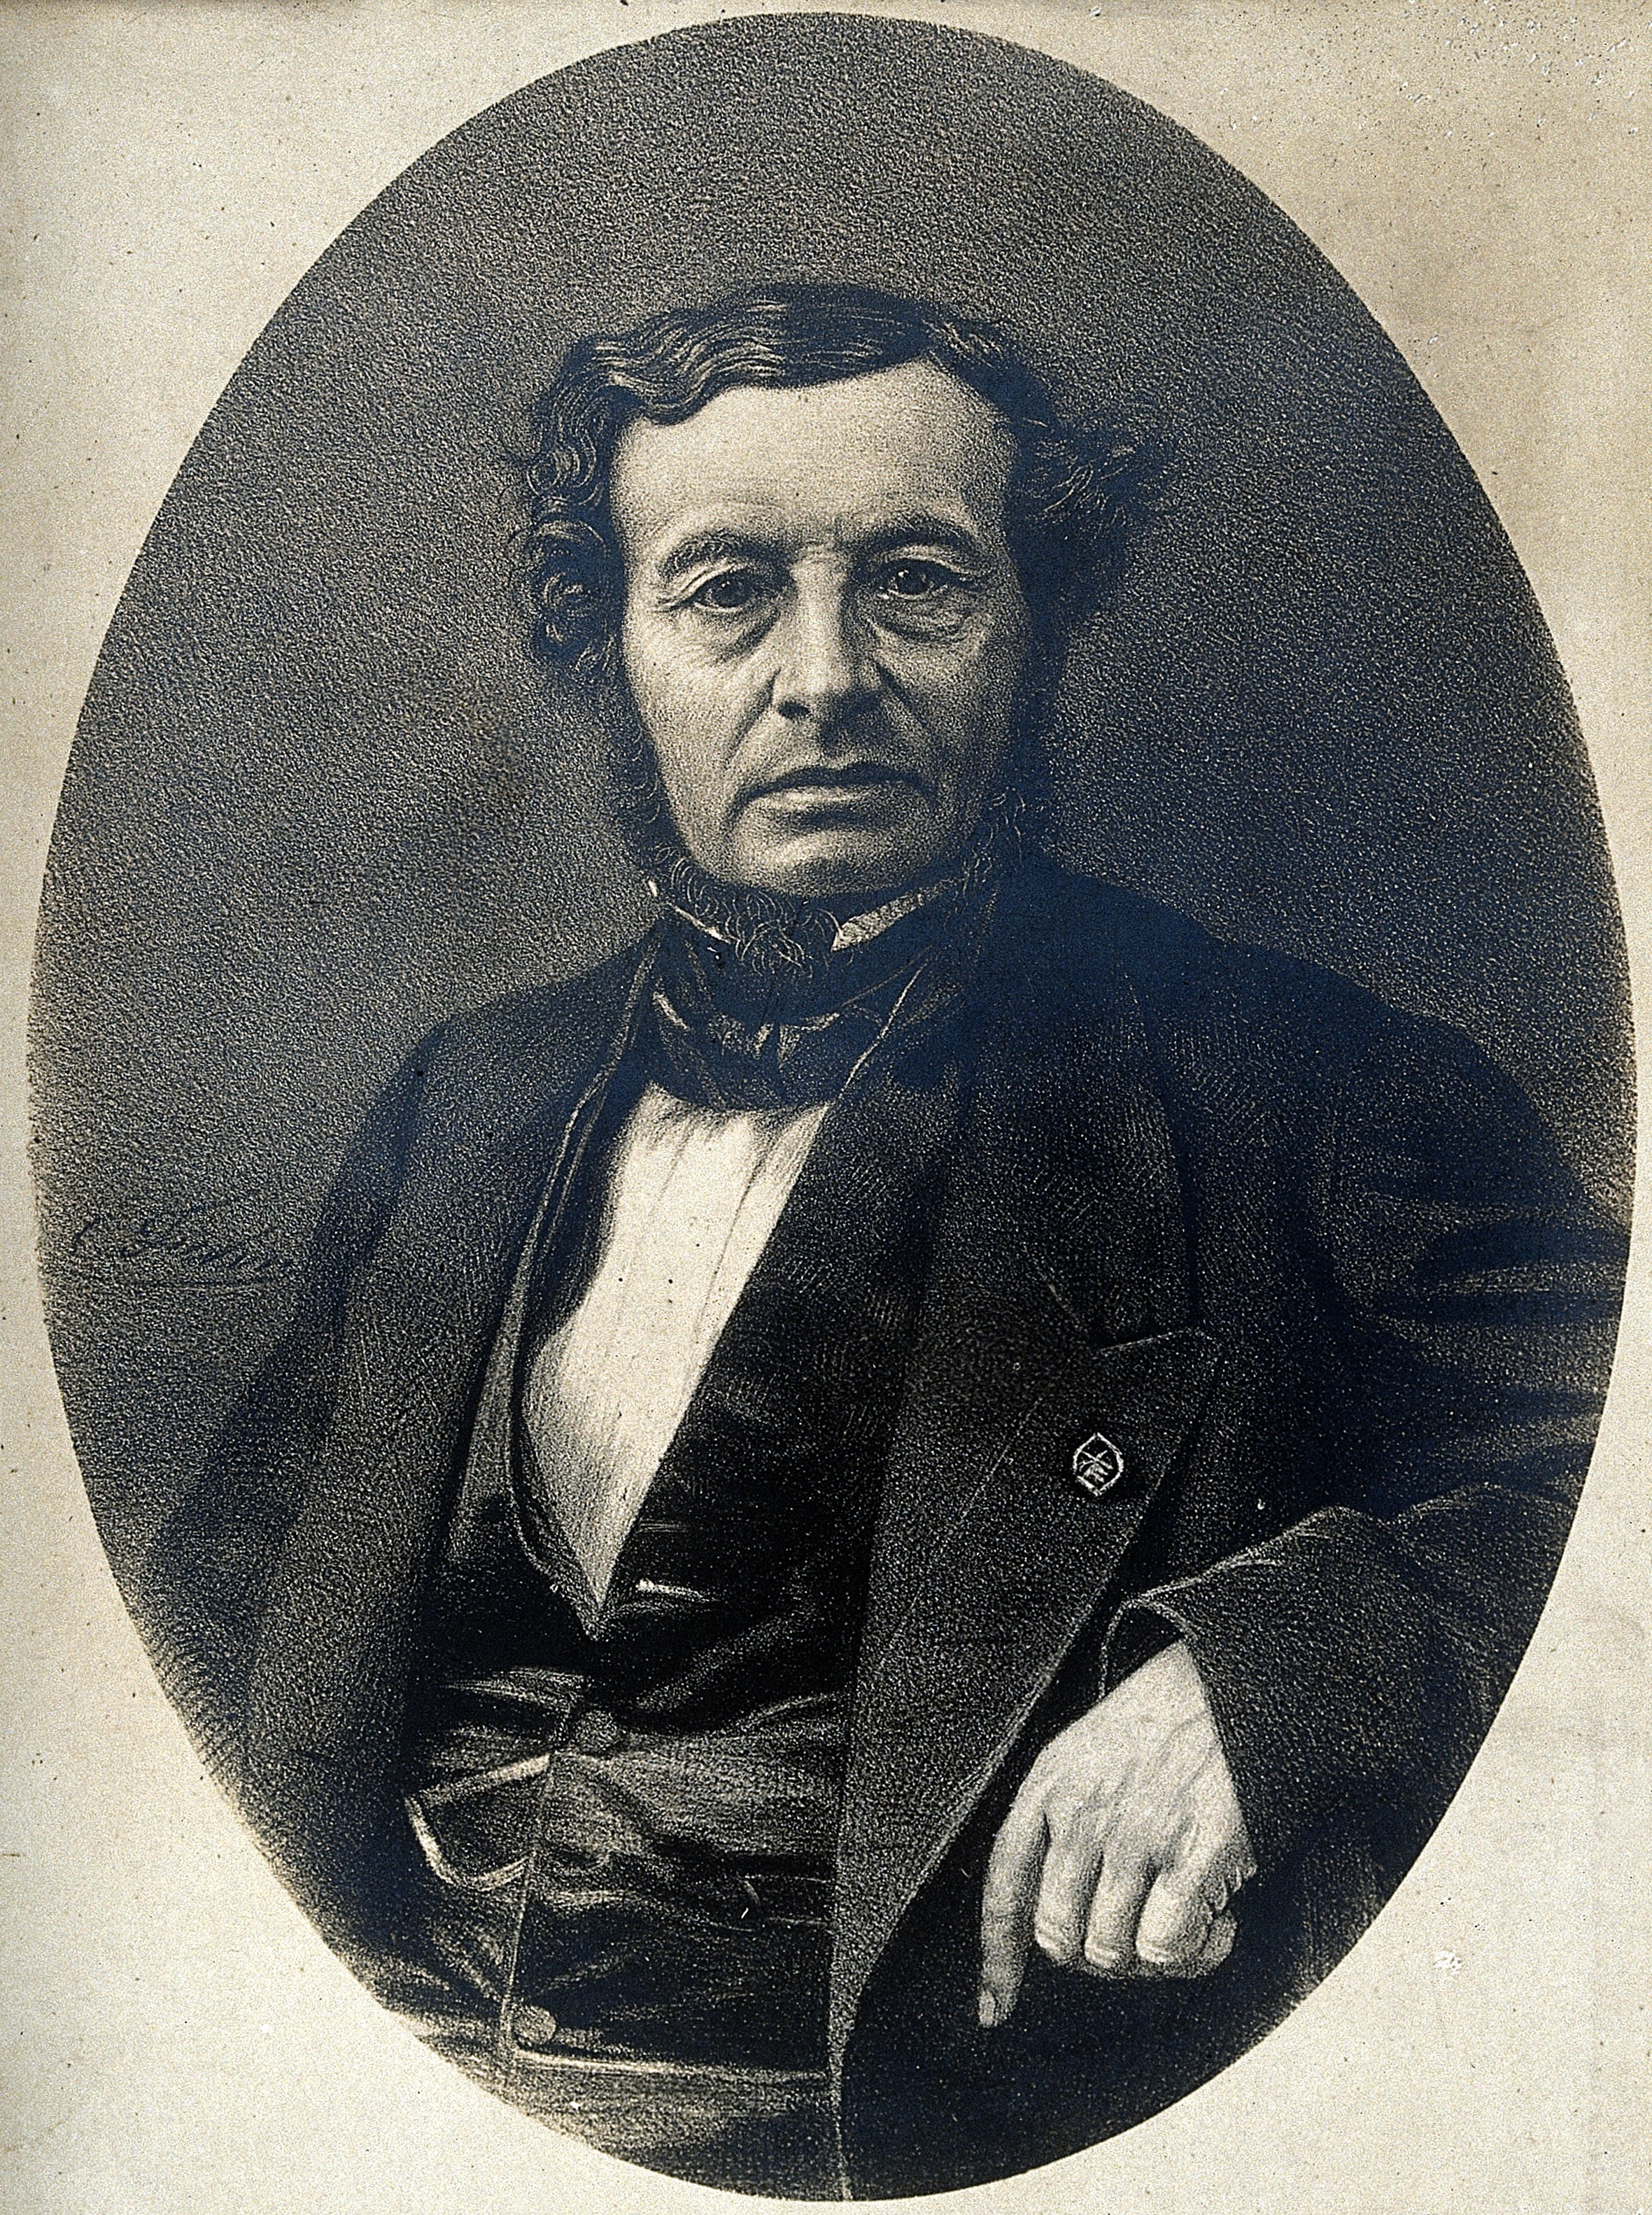 Joseph-François Malgaigne. Photograph after a lithograph. Wellcome V0028163